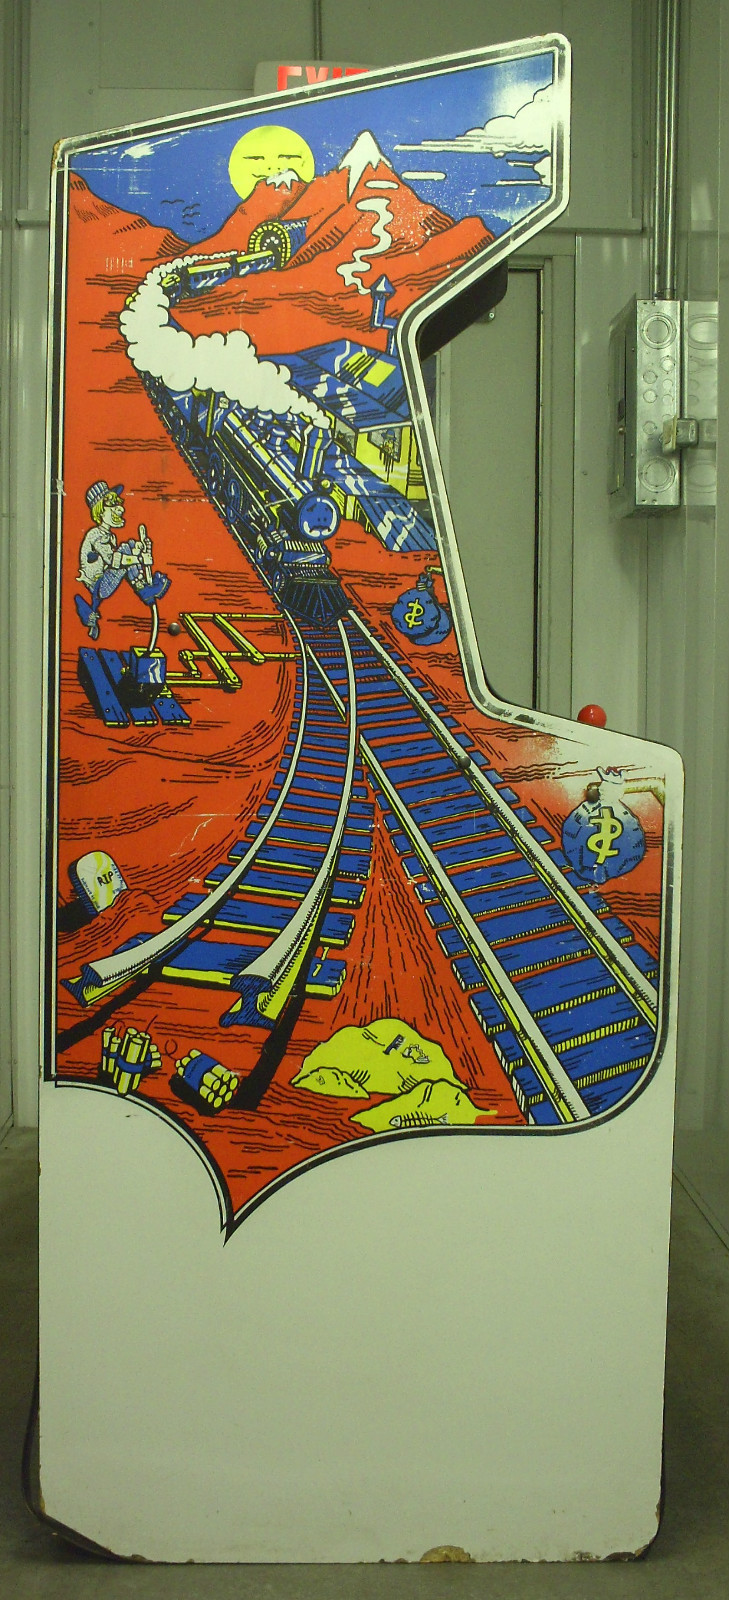 Railroad arcade game - Illustrated artwork - Photo 4